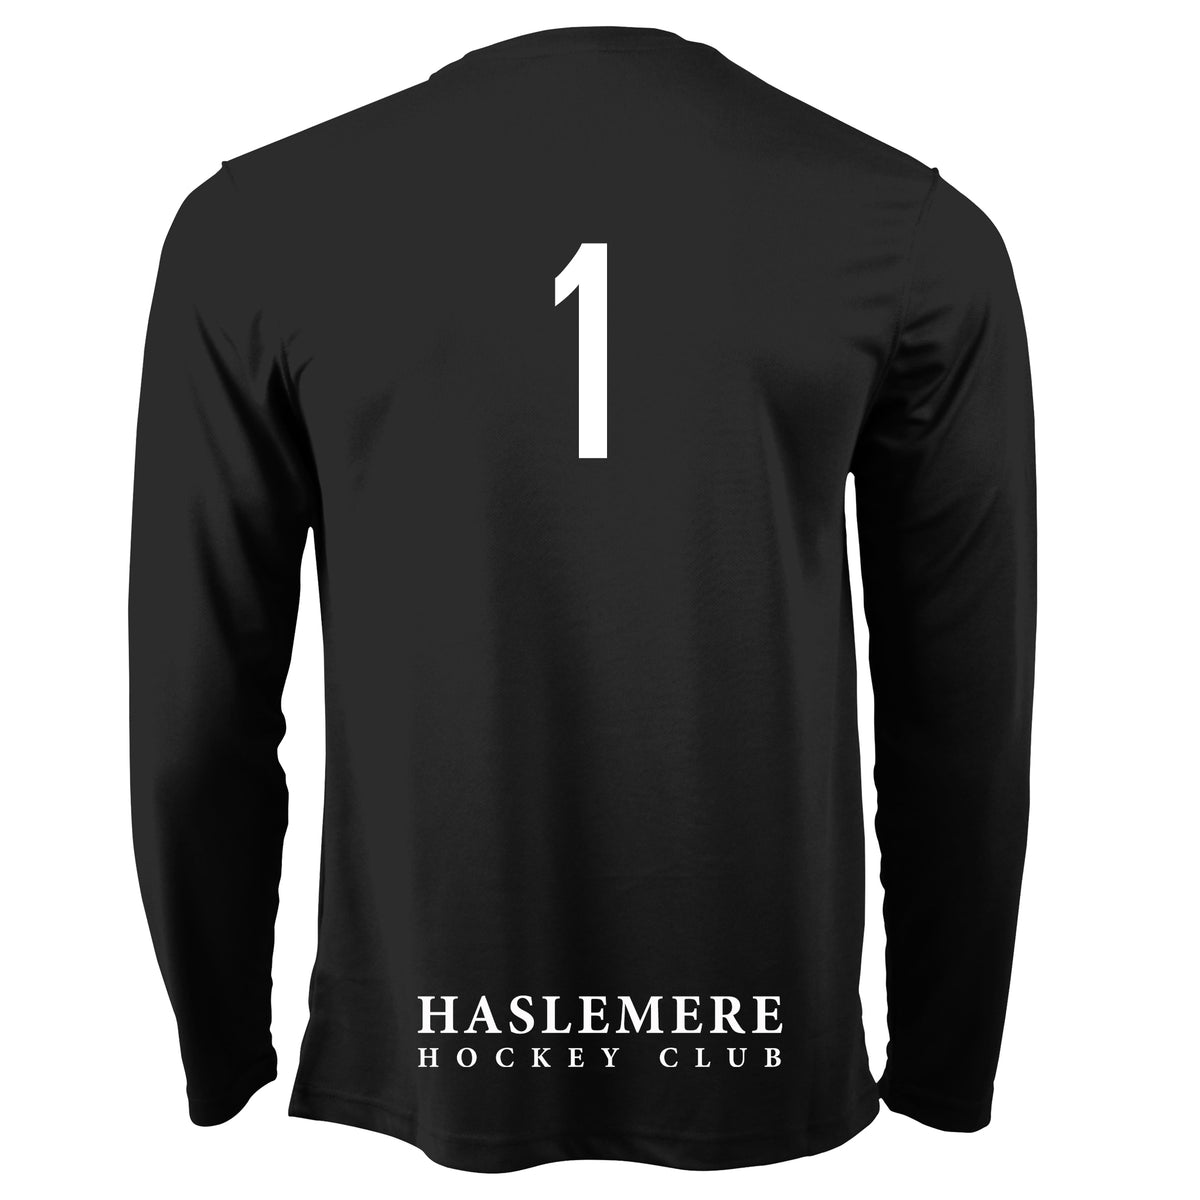 Haslemere HC Long Sleeve GK Jersey: Black